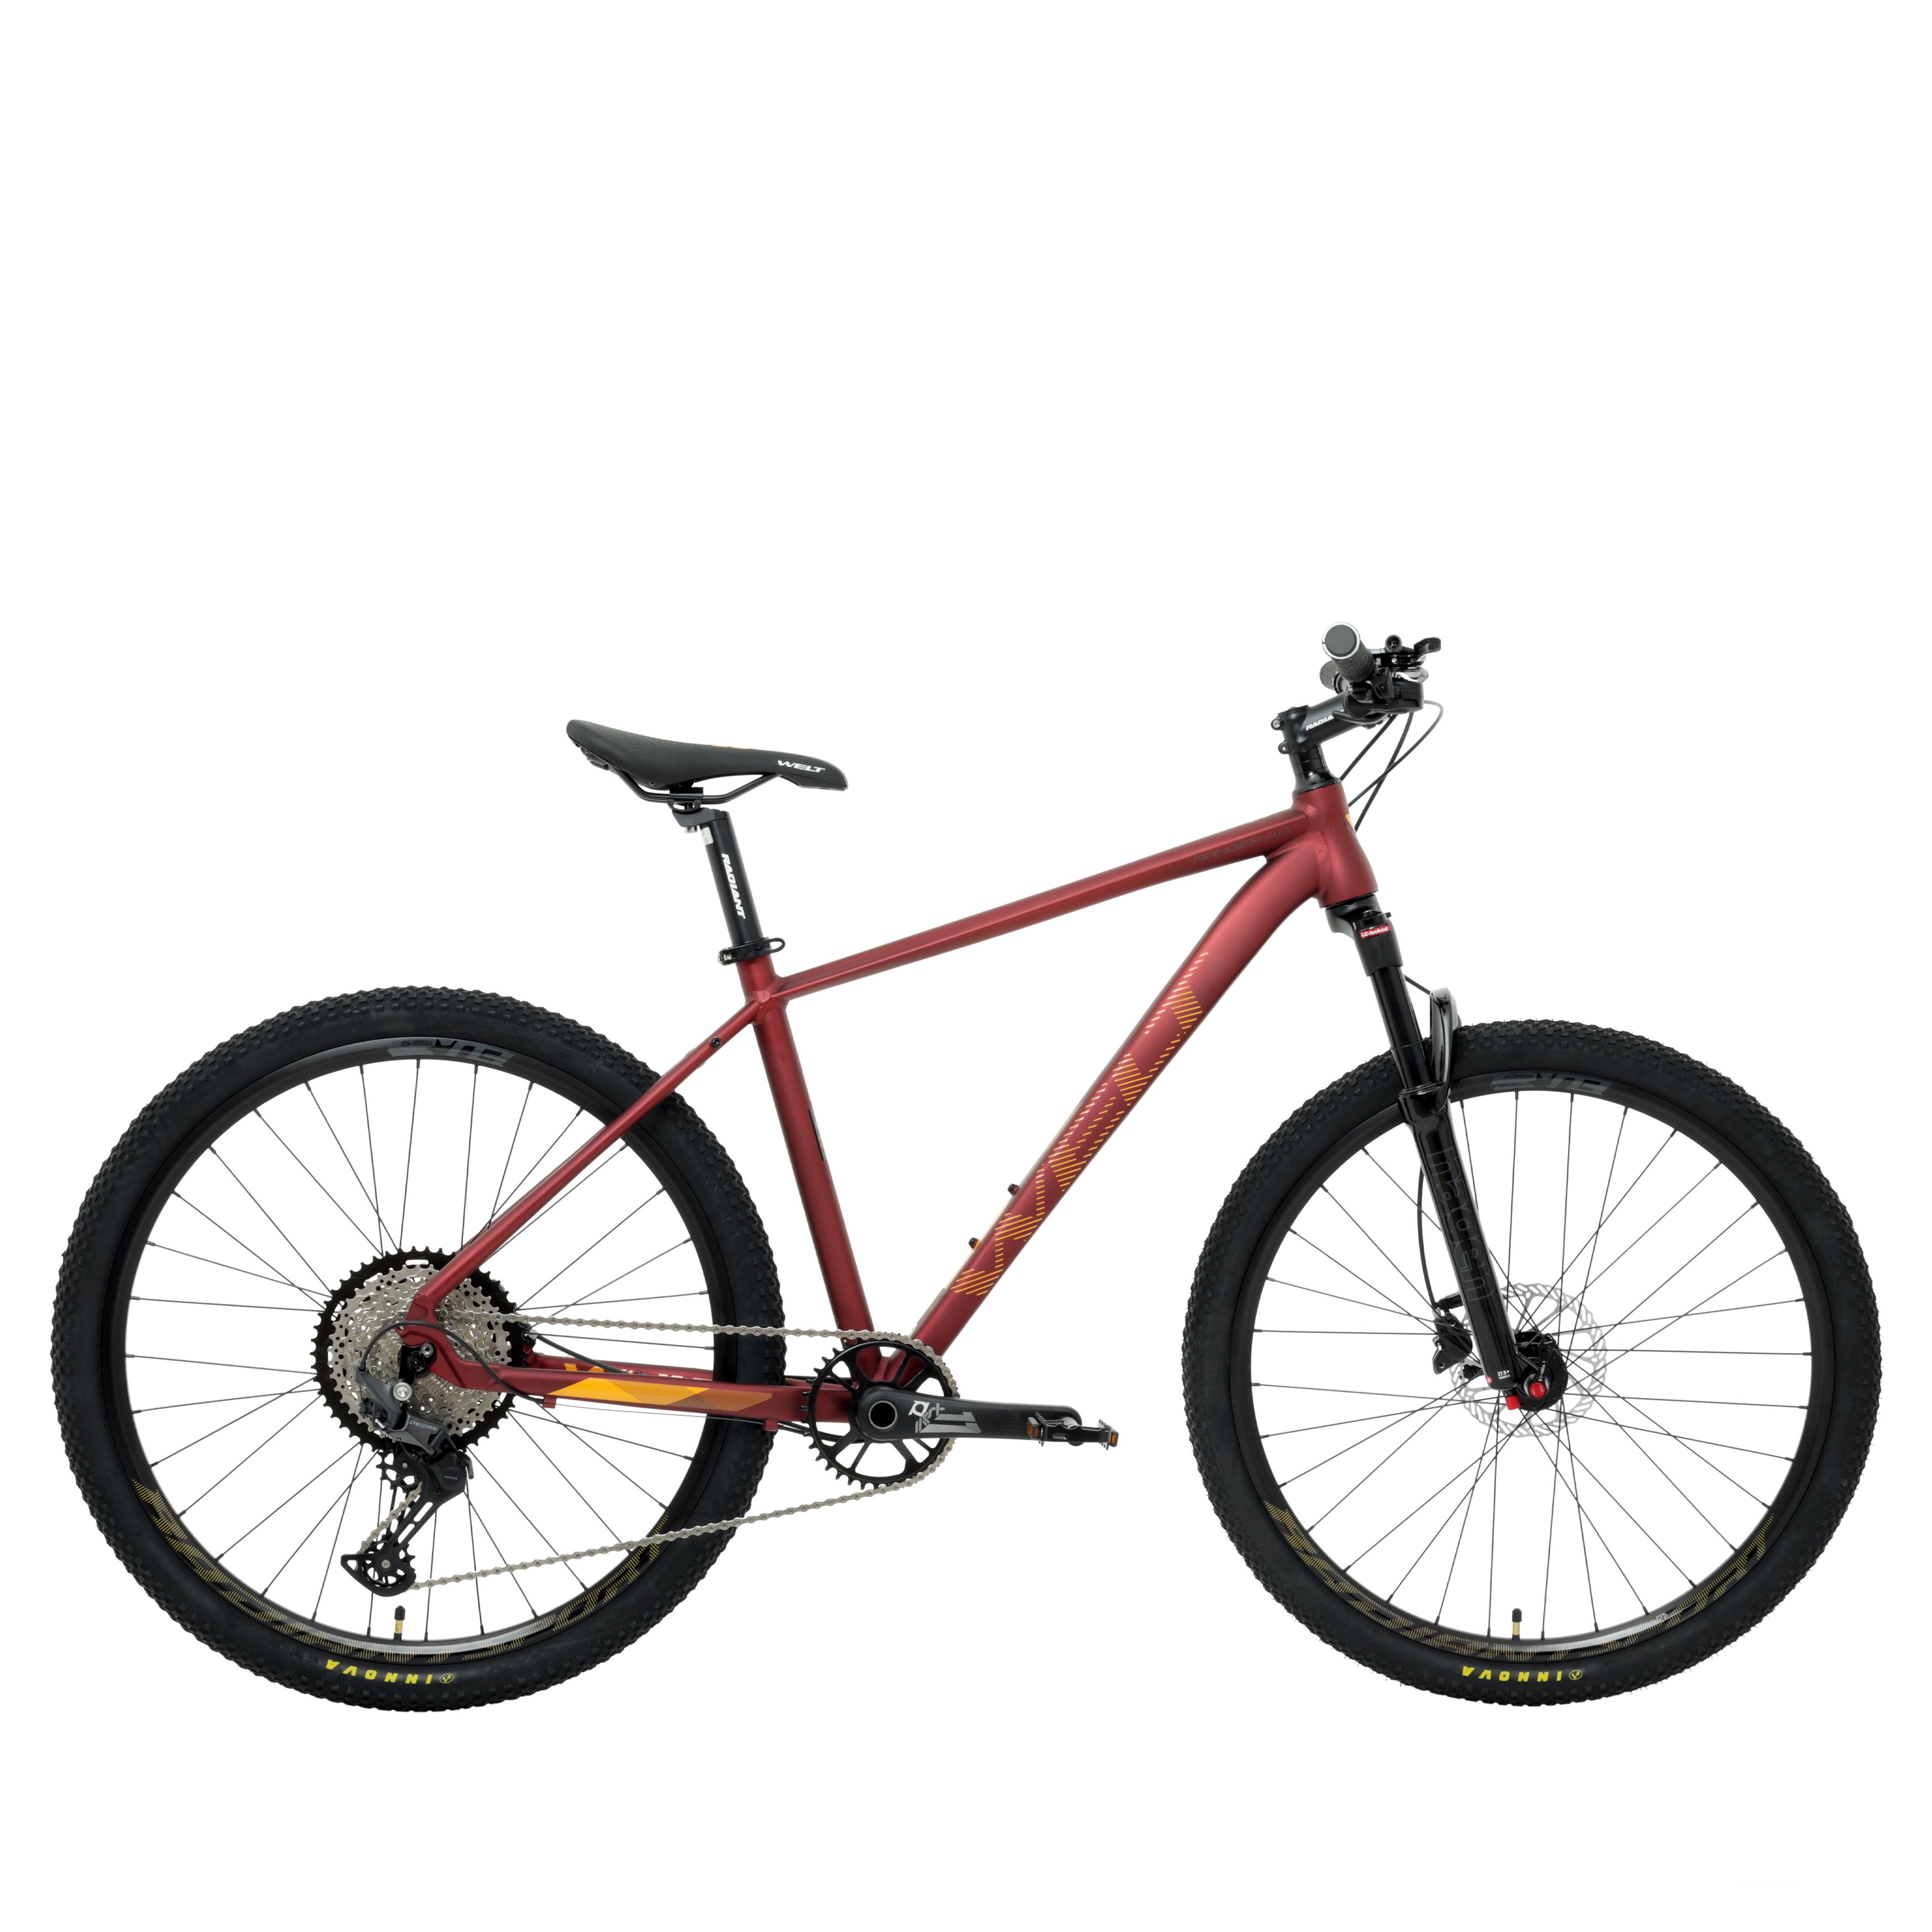 Scott aspect 970 2022. Горный велосипед format 1432 (2021). Format 1432 27.5. Welt ranger 2.0